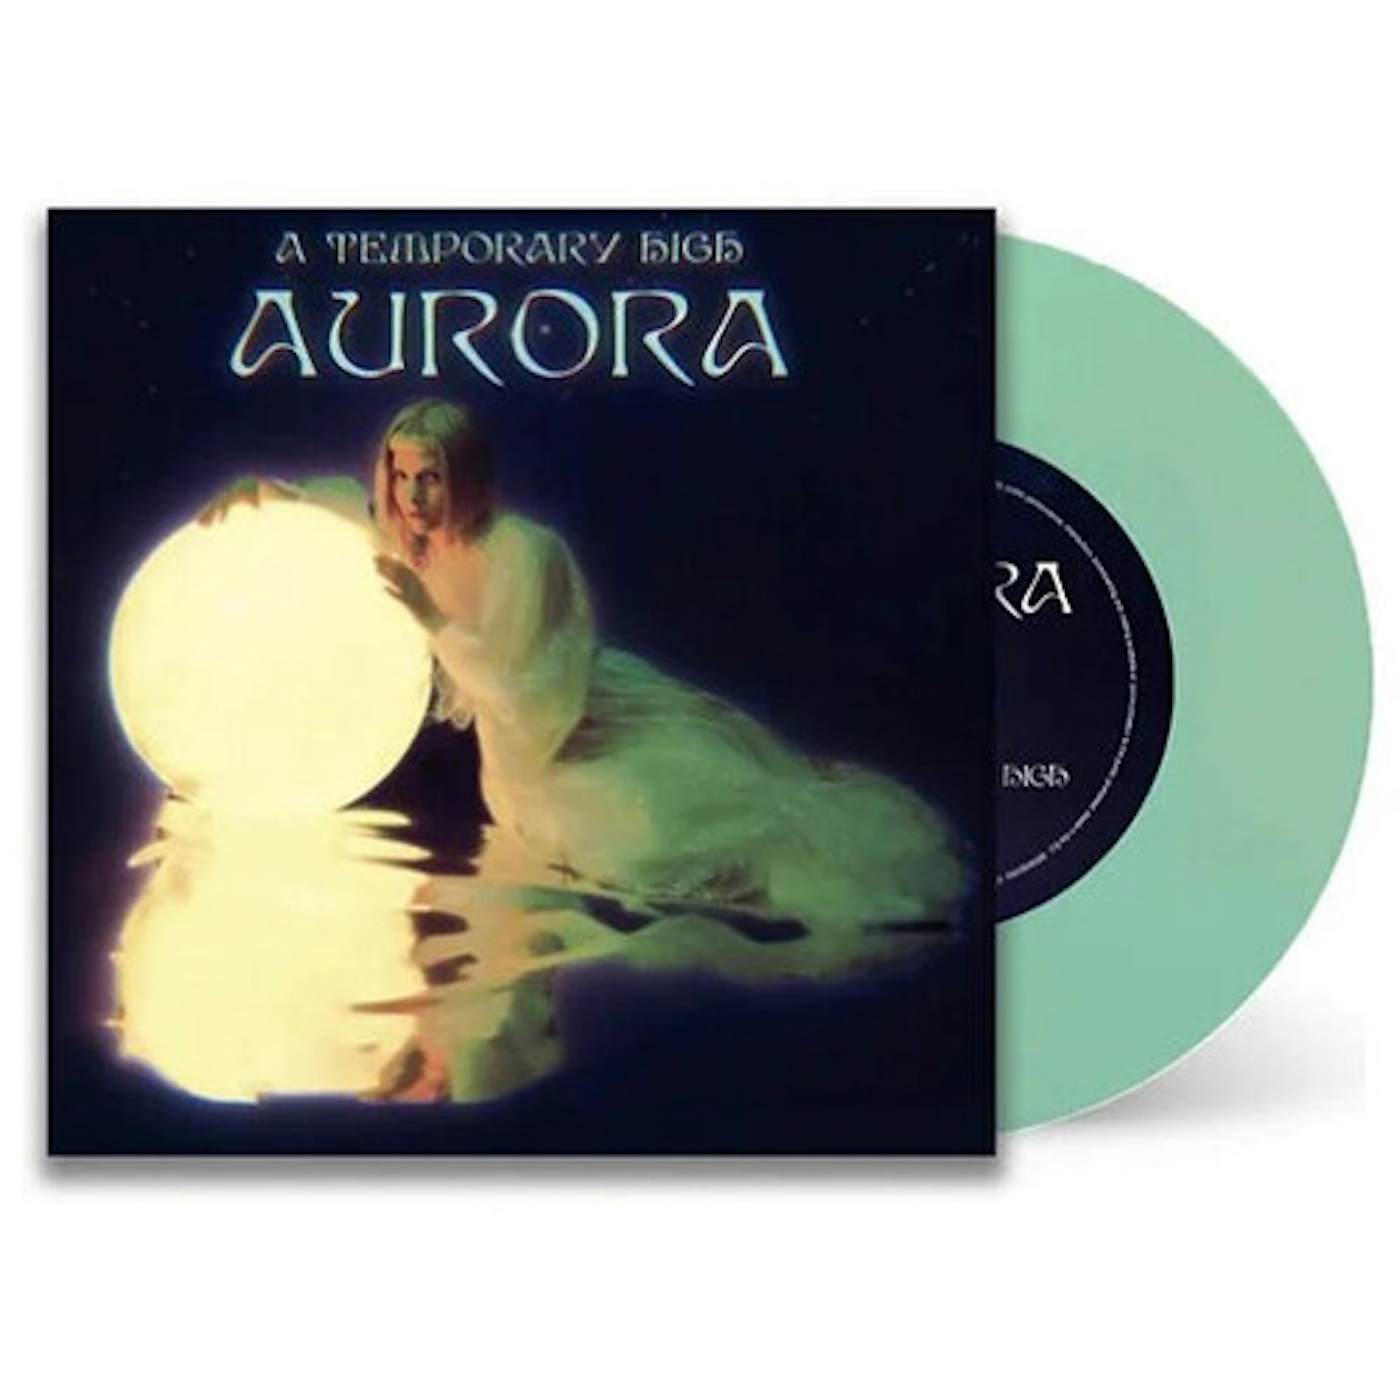 AURORA Temporary High Vinyl Record